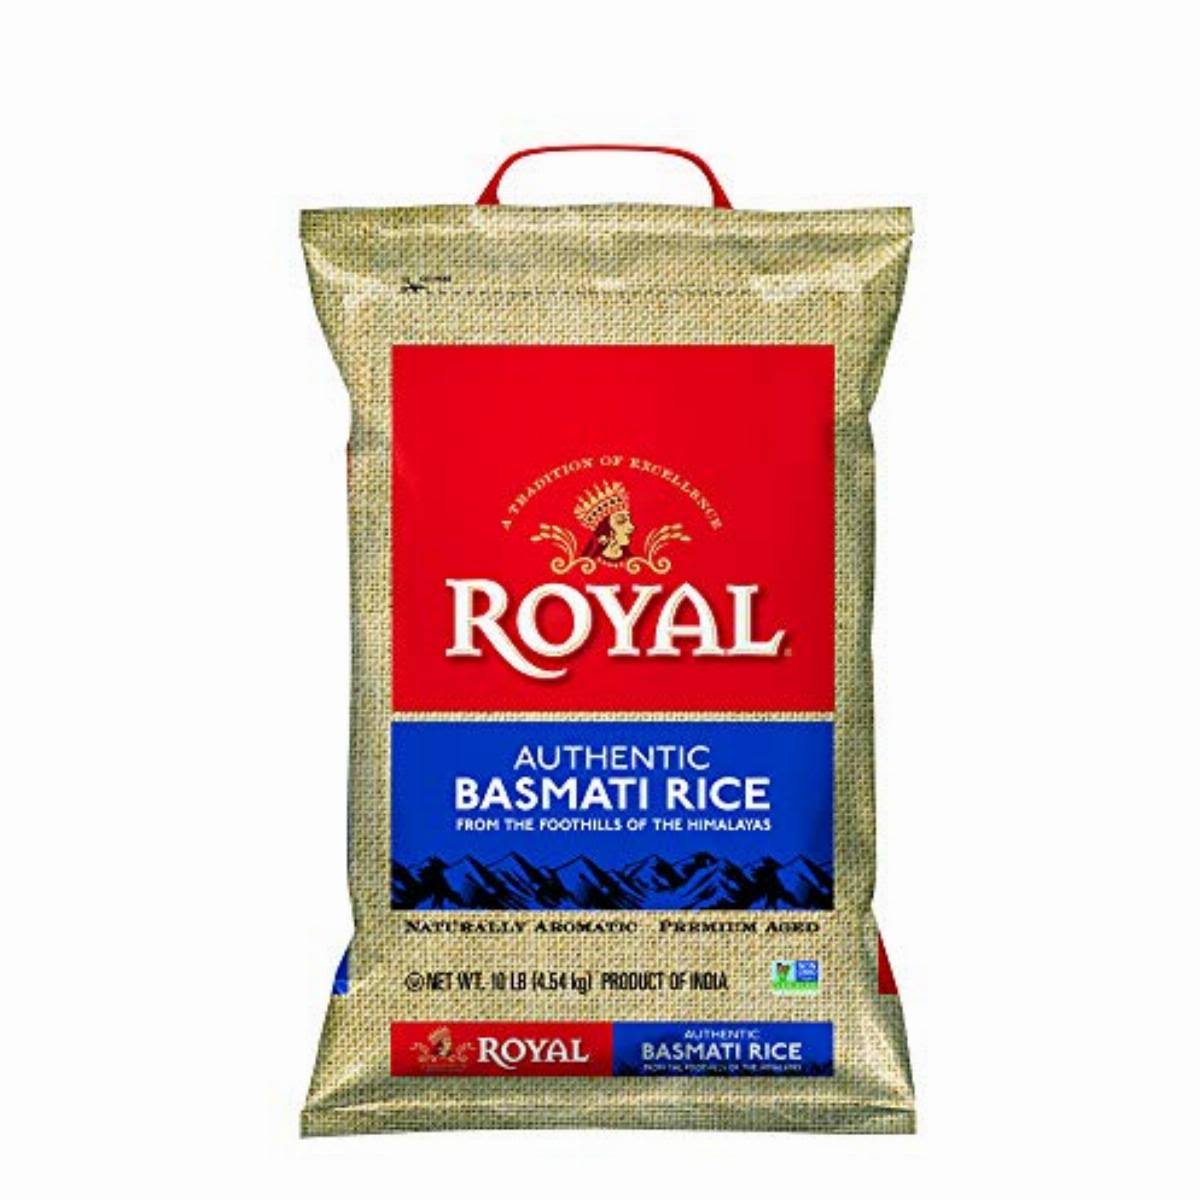 Royal Basmati Rice in Plastic Bag, 10 Pound